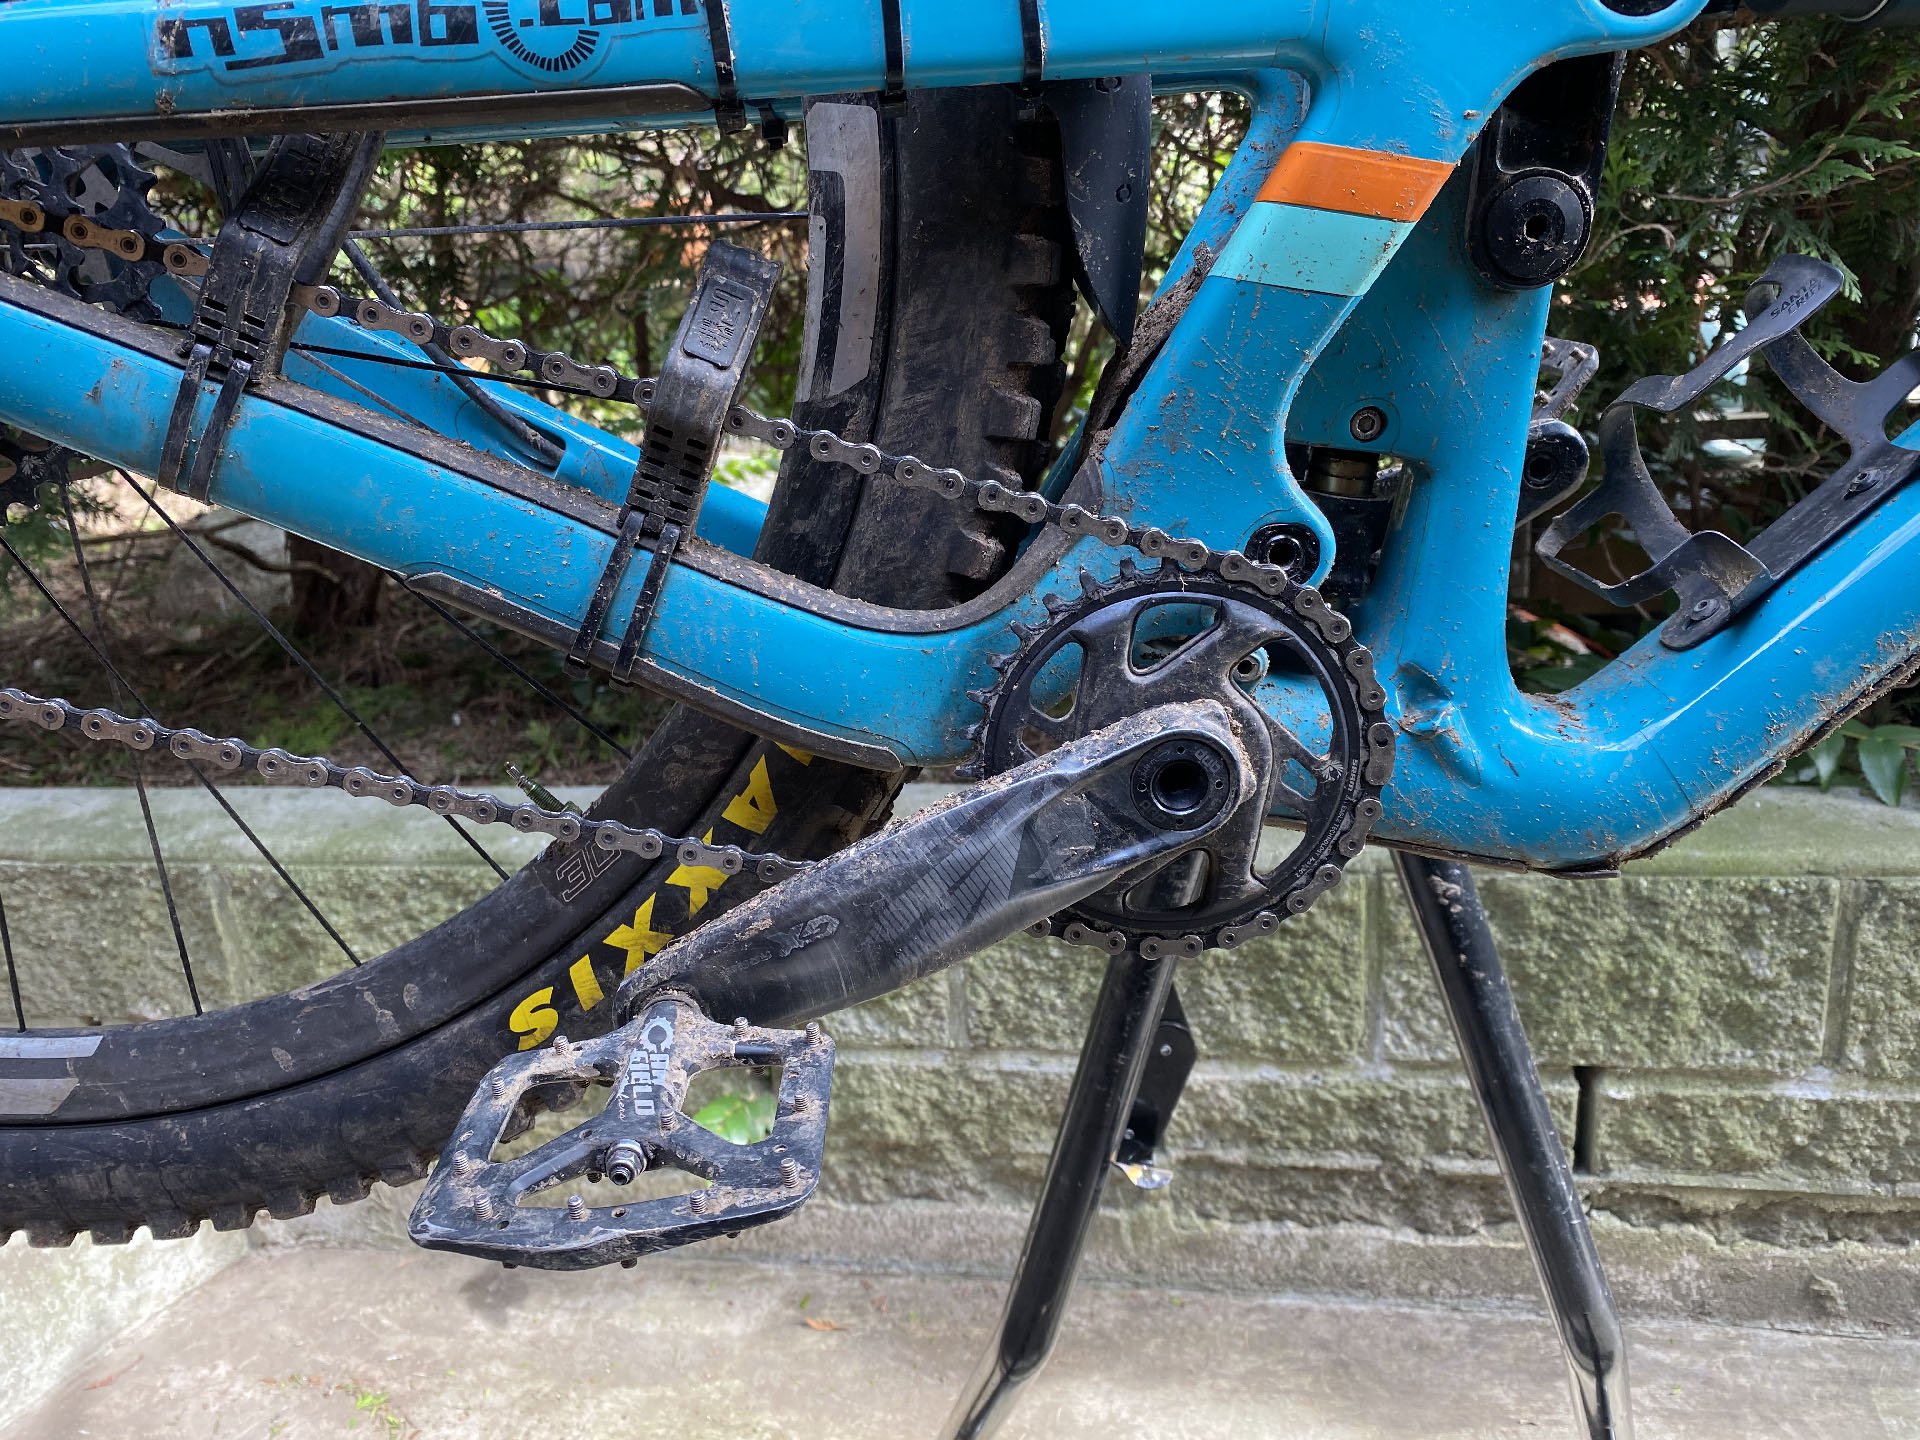 Convert A Press Fit Road Bike Bottom Bracket To Threaded?